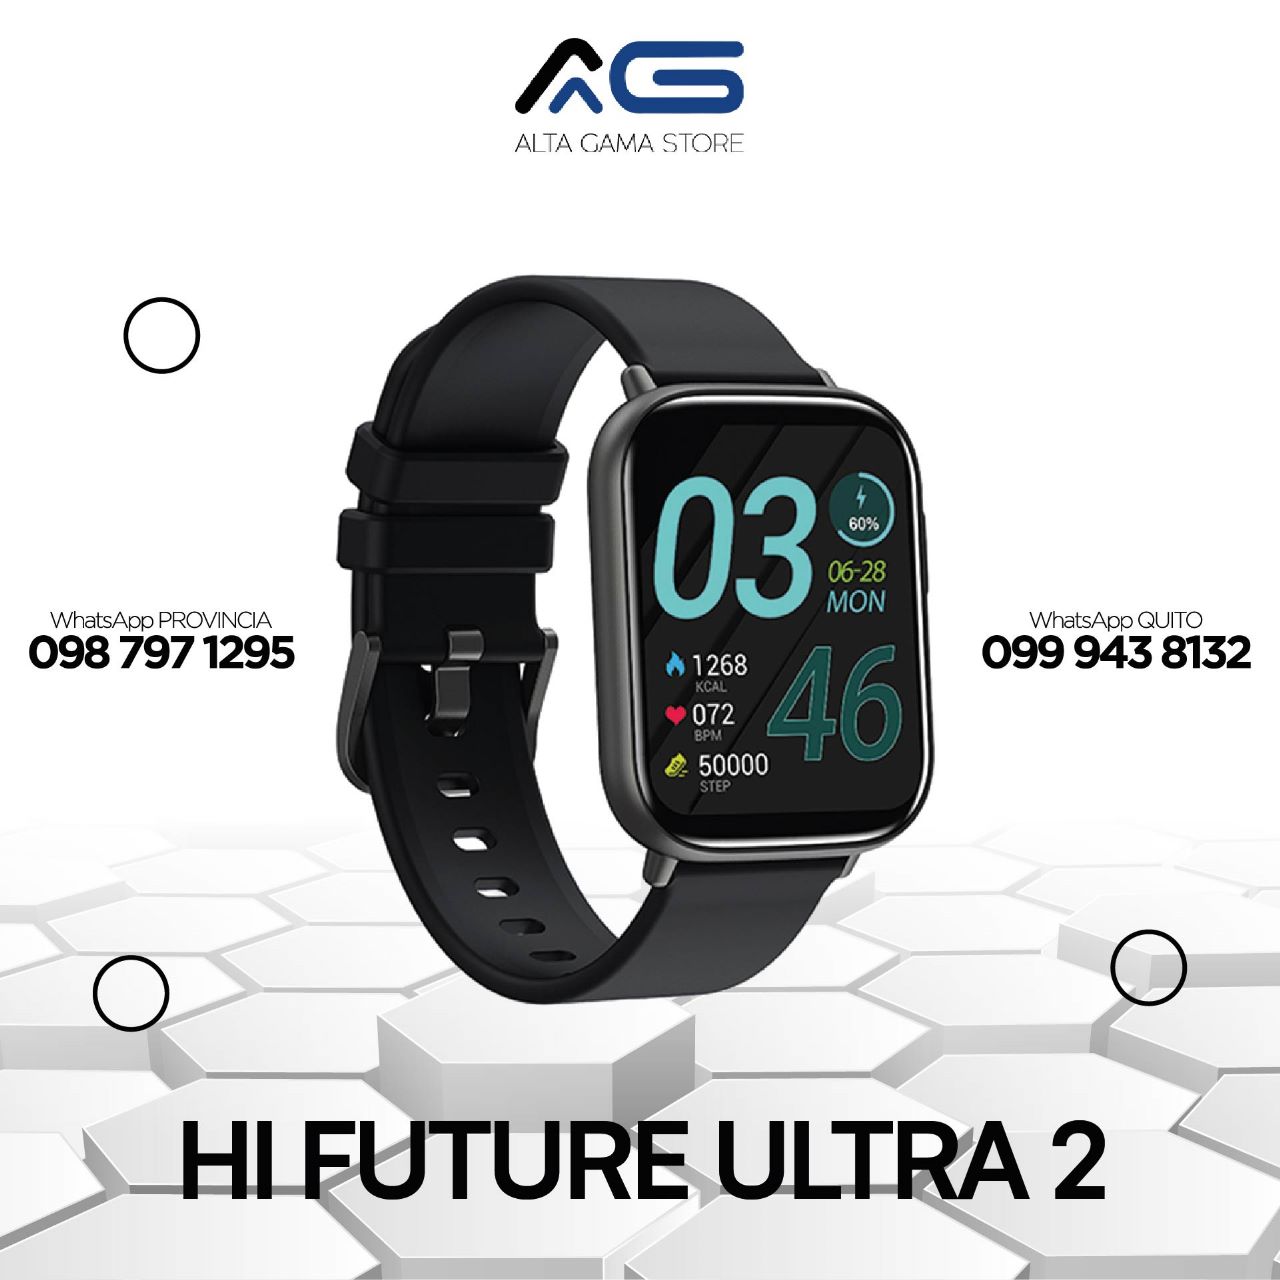 Huawei Watch Fit 2 – Alta gama